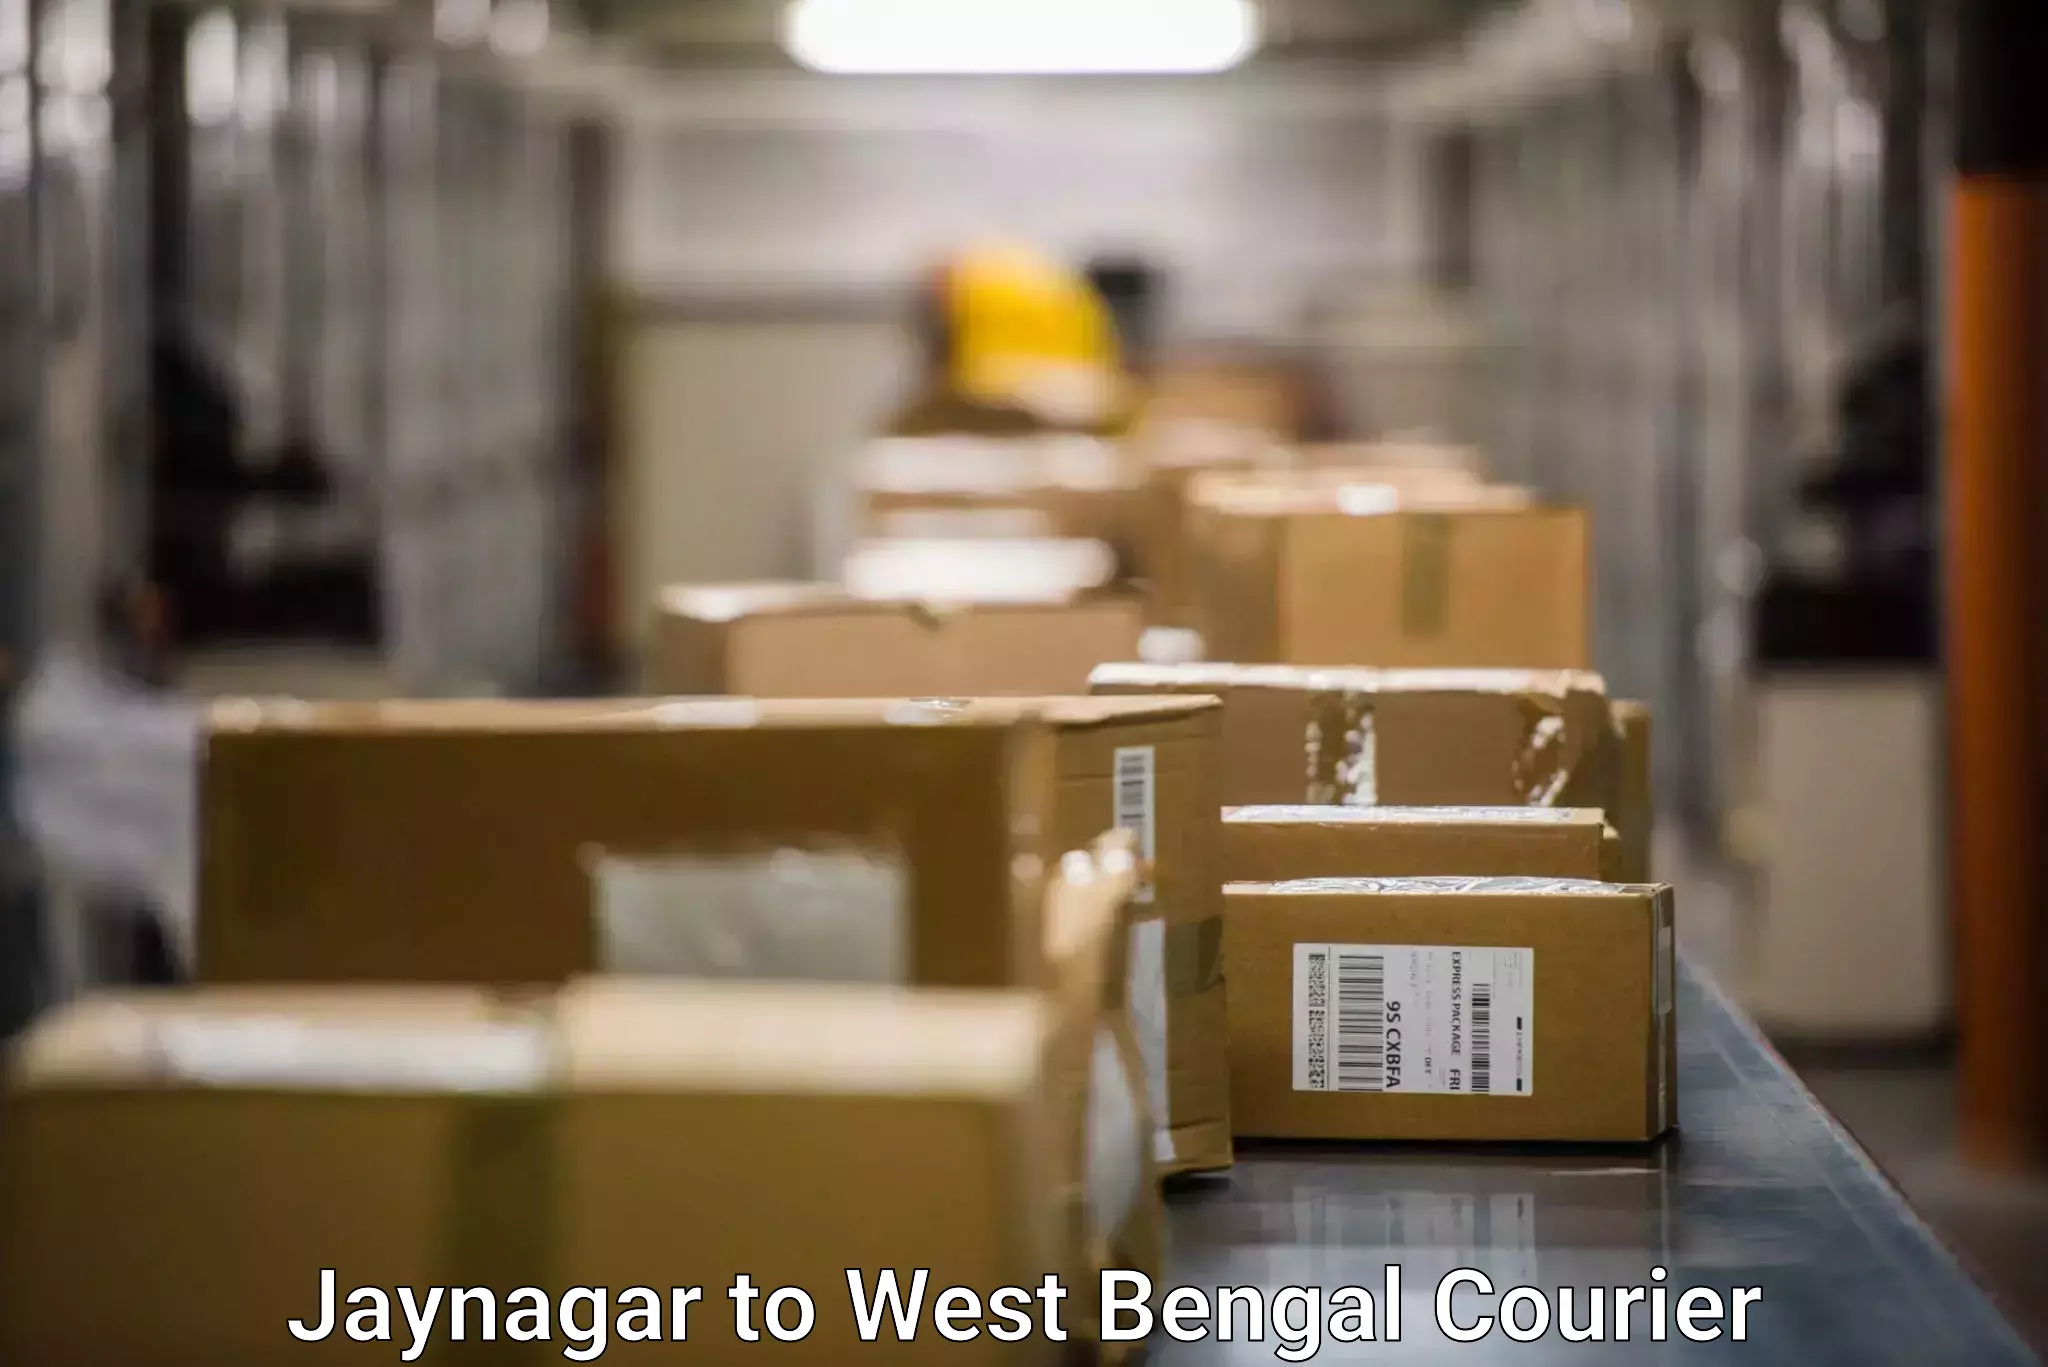 Global logistics network Jaynagar to West Bengal